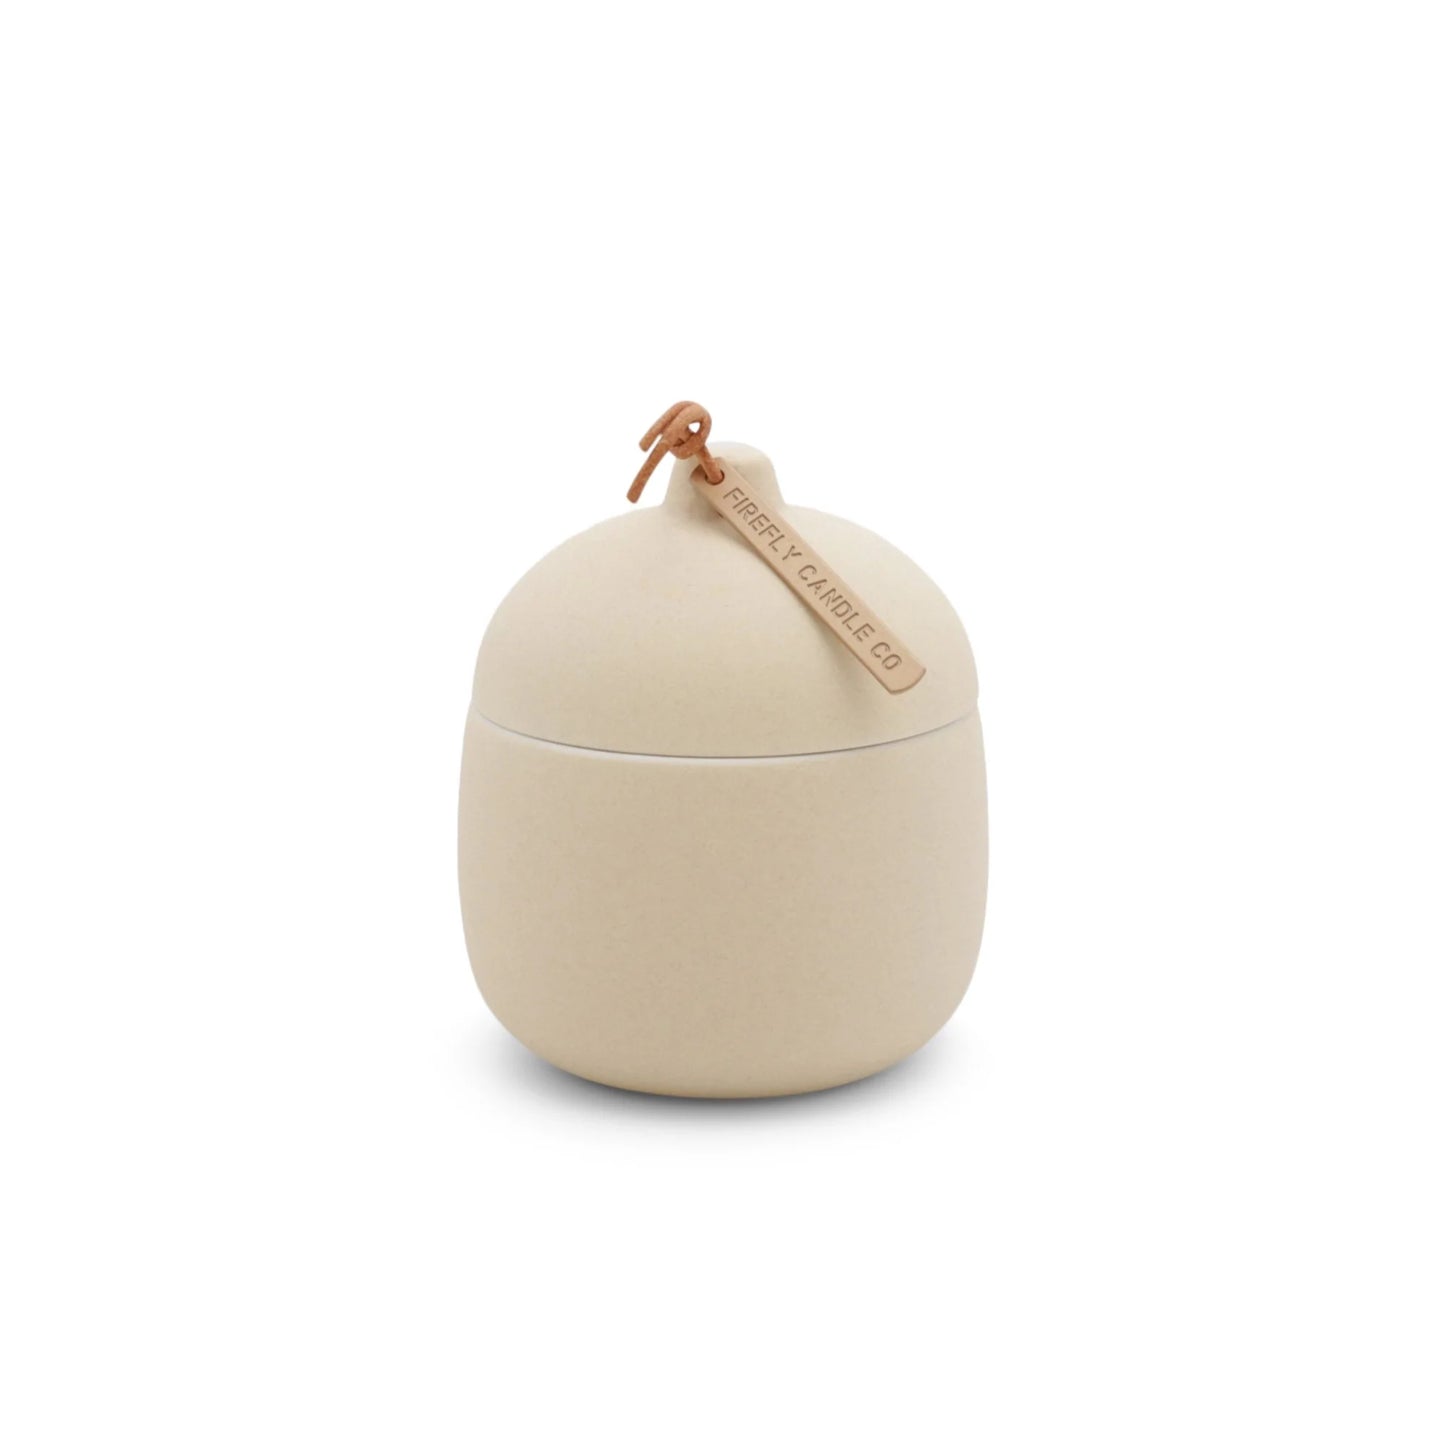 Keepsake 4 oz Candle - Tea Tree Rose - white colored clay vessel